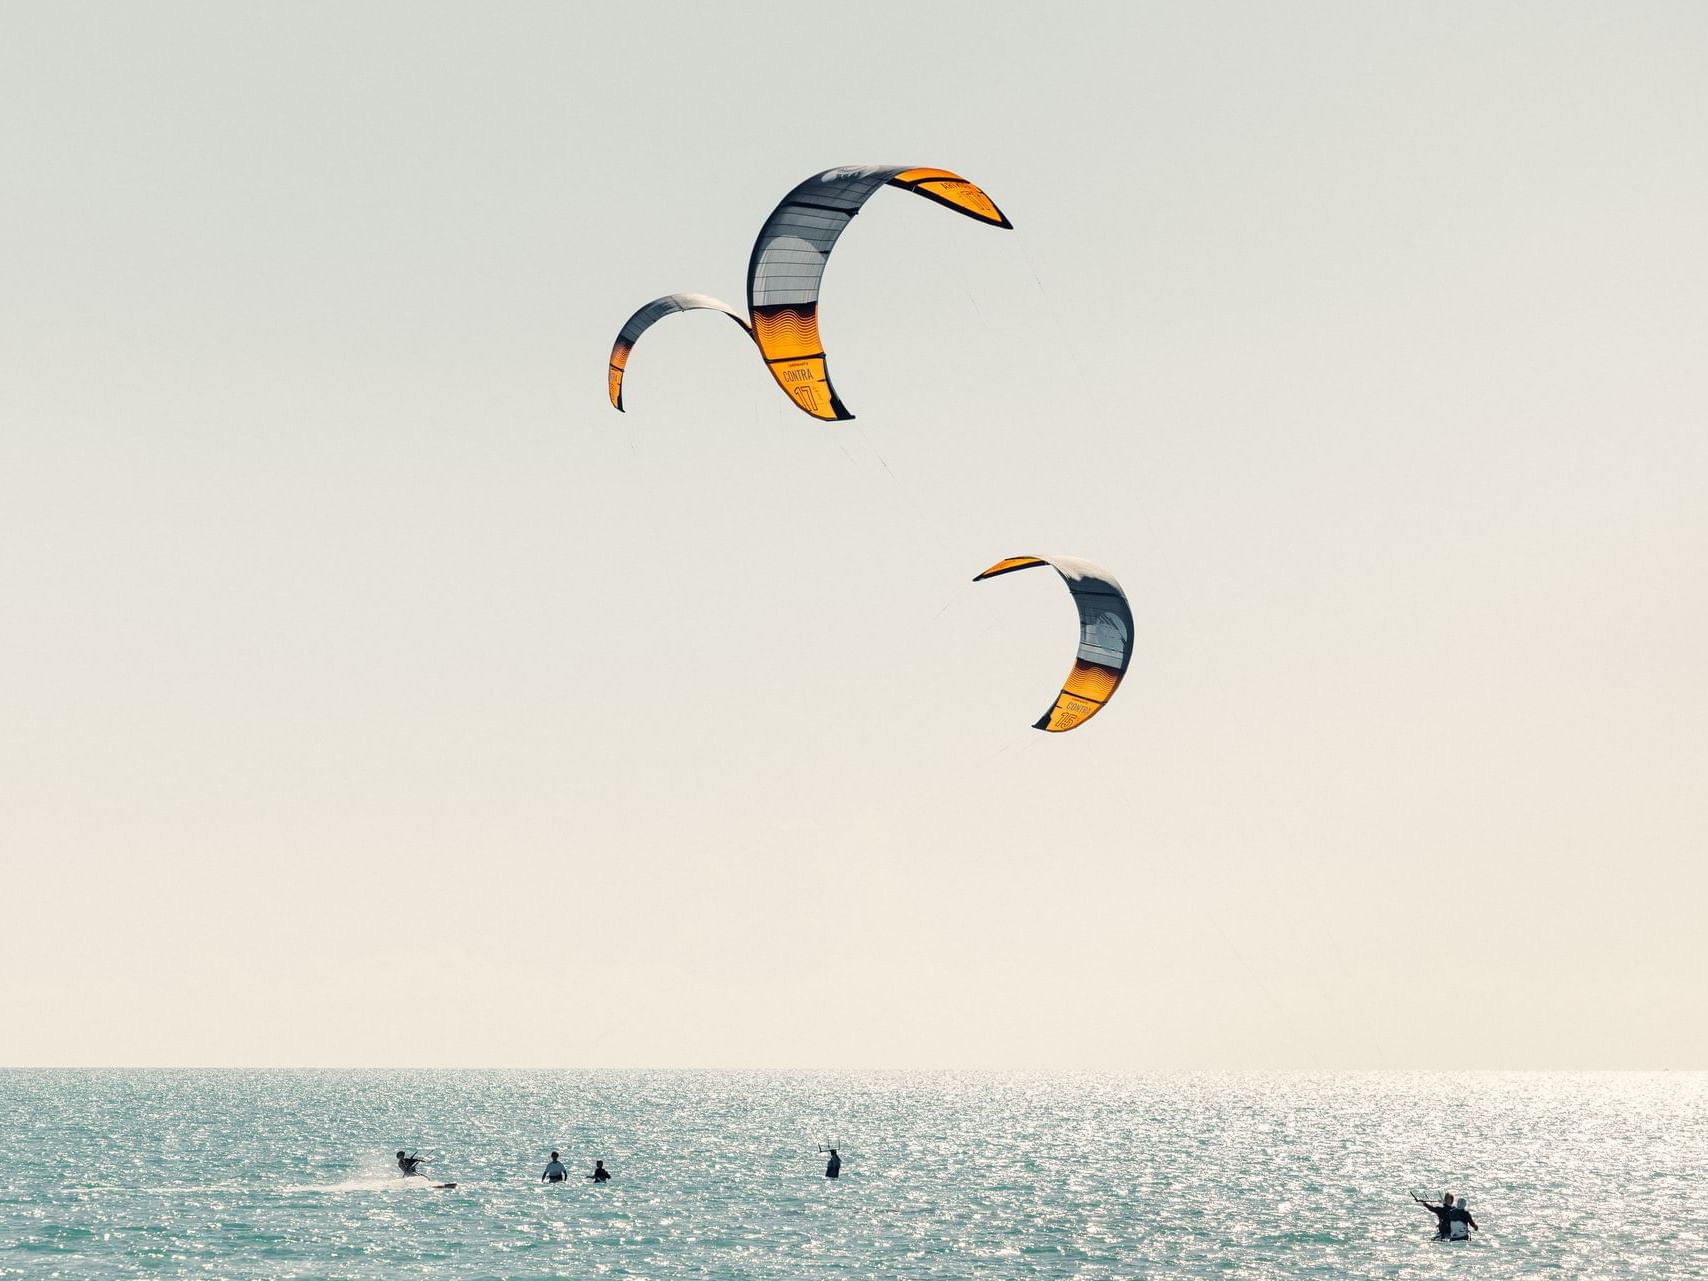 Kitesurfing above the beach near H2O Life Style Resort